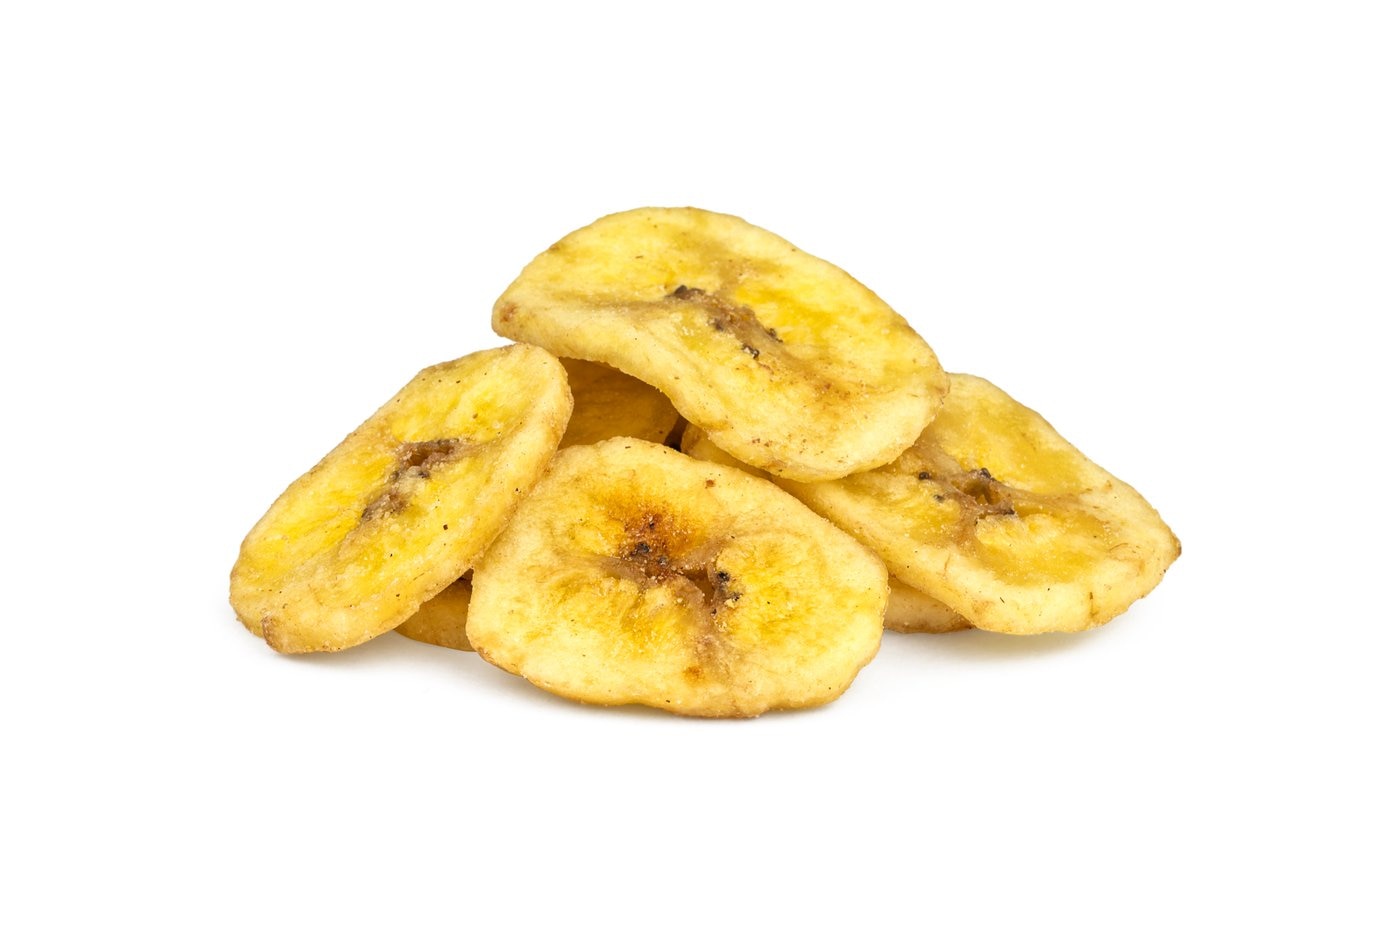 Sweetened Banana Chips image zoom